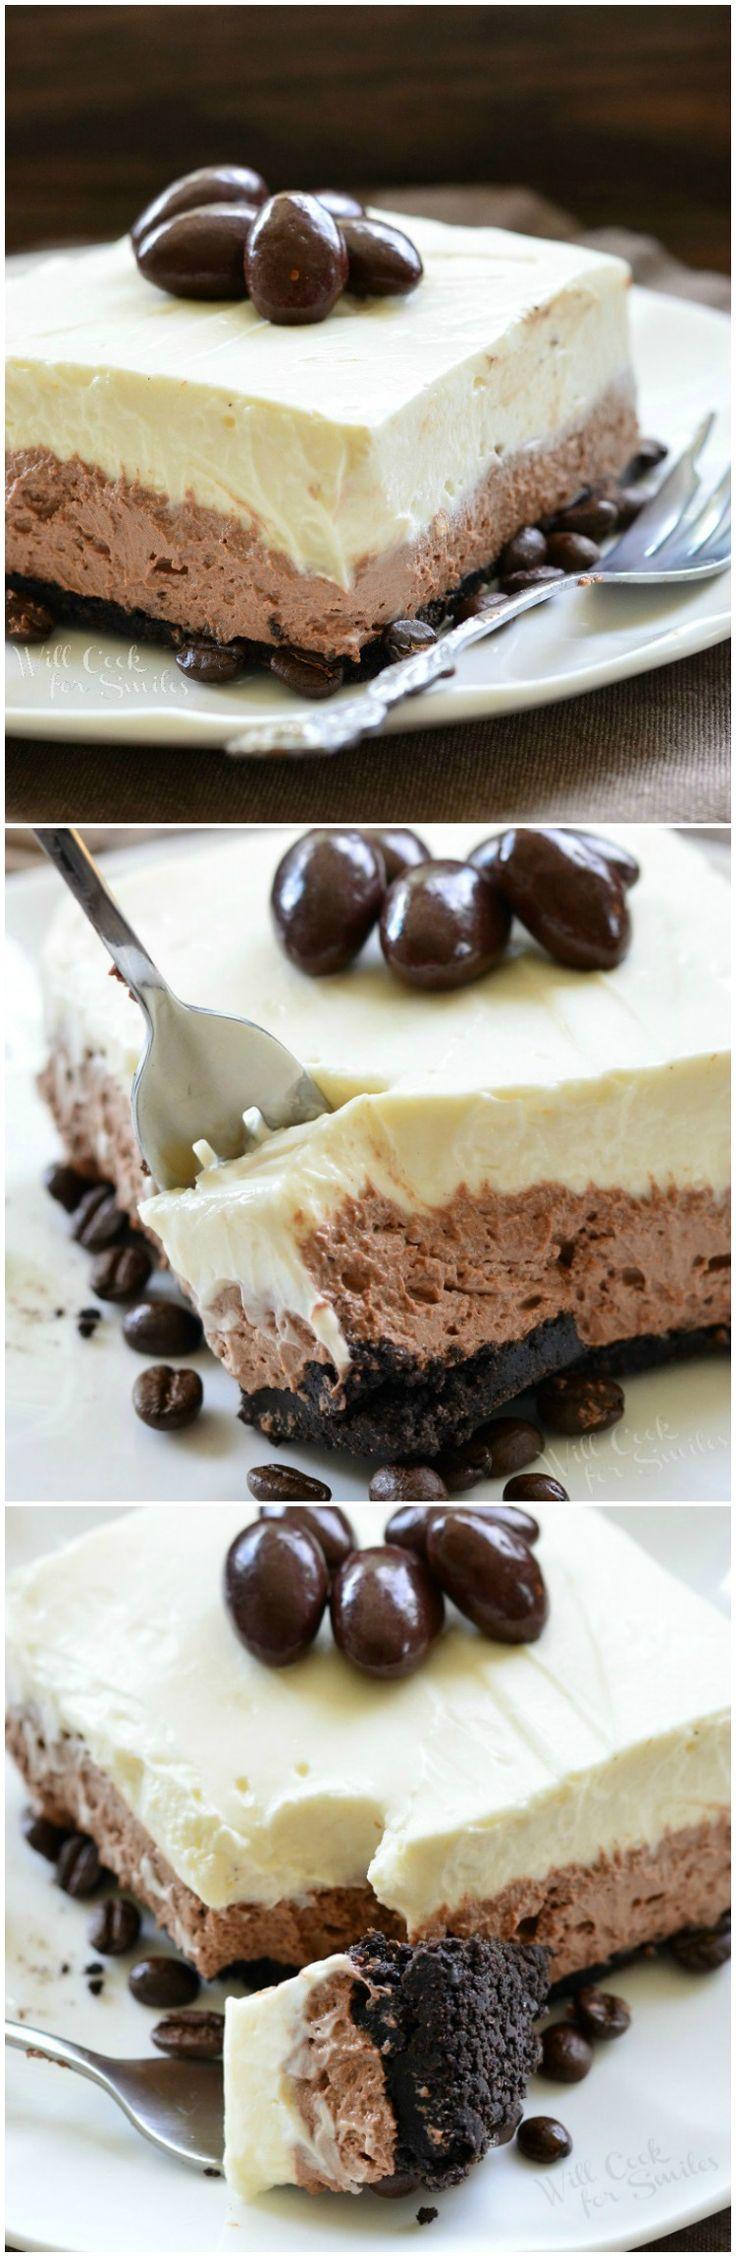 Wedding - Layered Chocolate Espresso Cheesecake Dessert (No Bake)